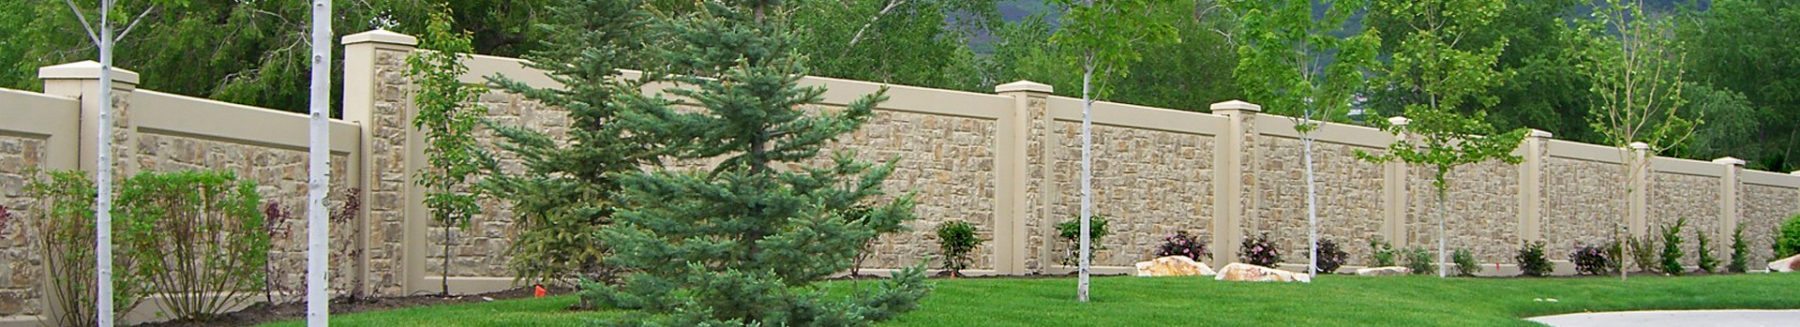 StoneTree® Concrete Precast Boundary Walls Beautify Landscape